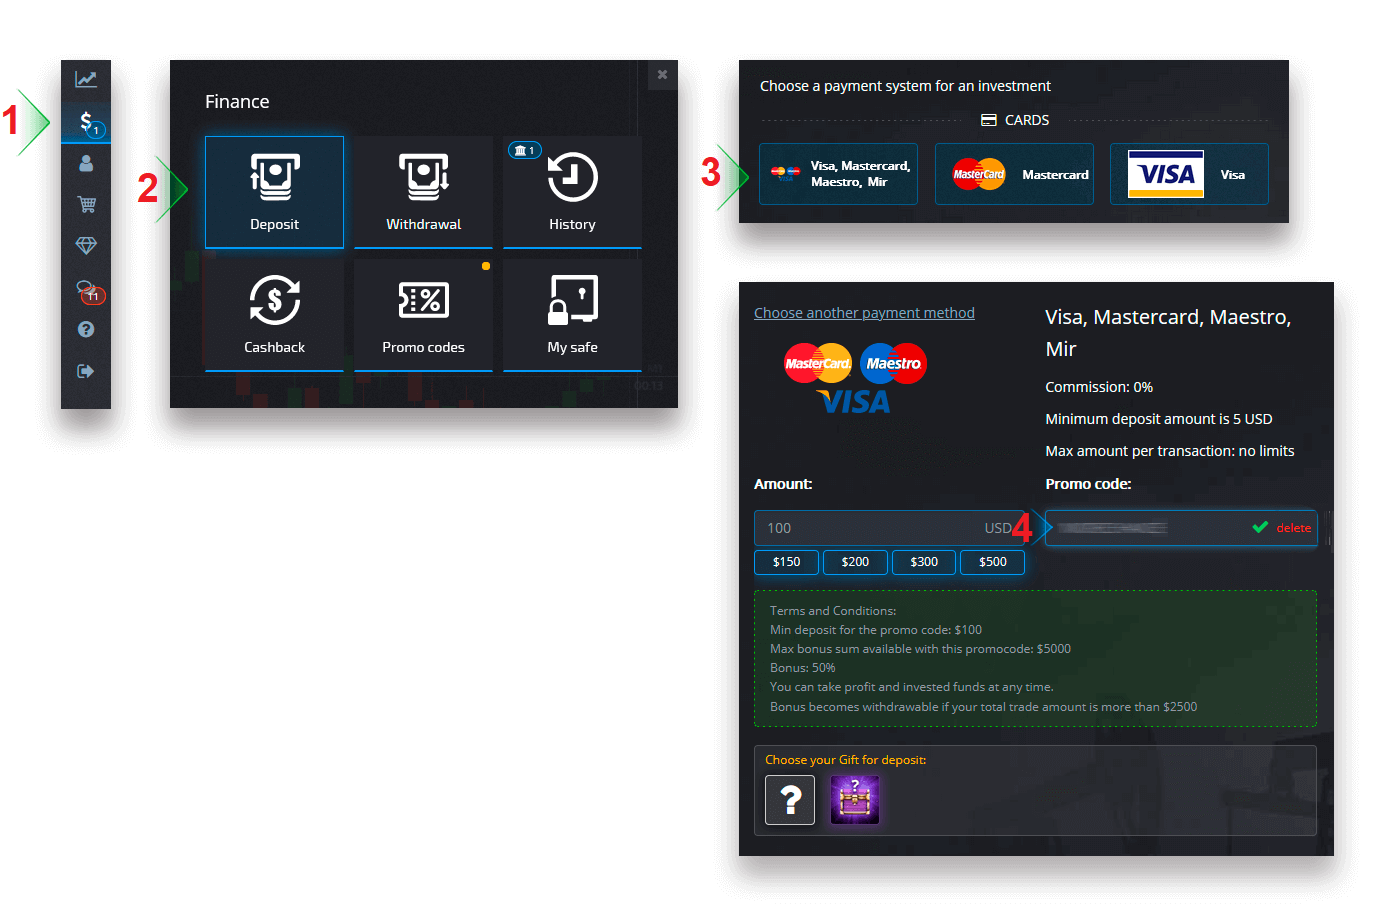 Pocket Option پر سائن اپ اور رقم کیسے جمع کریں۔